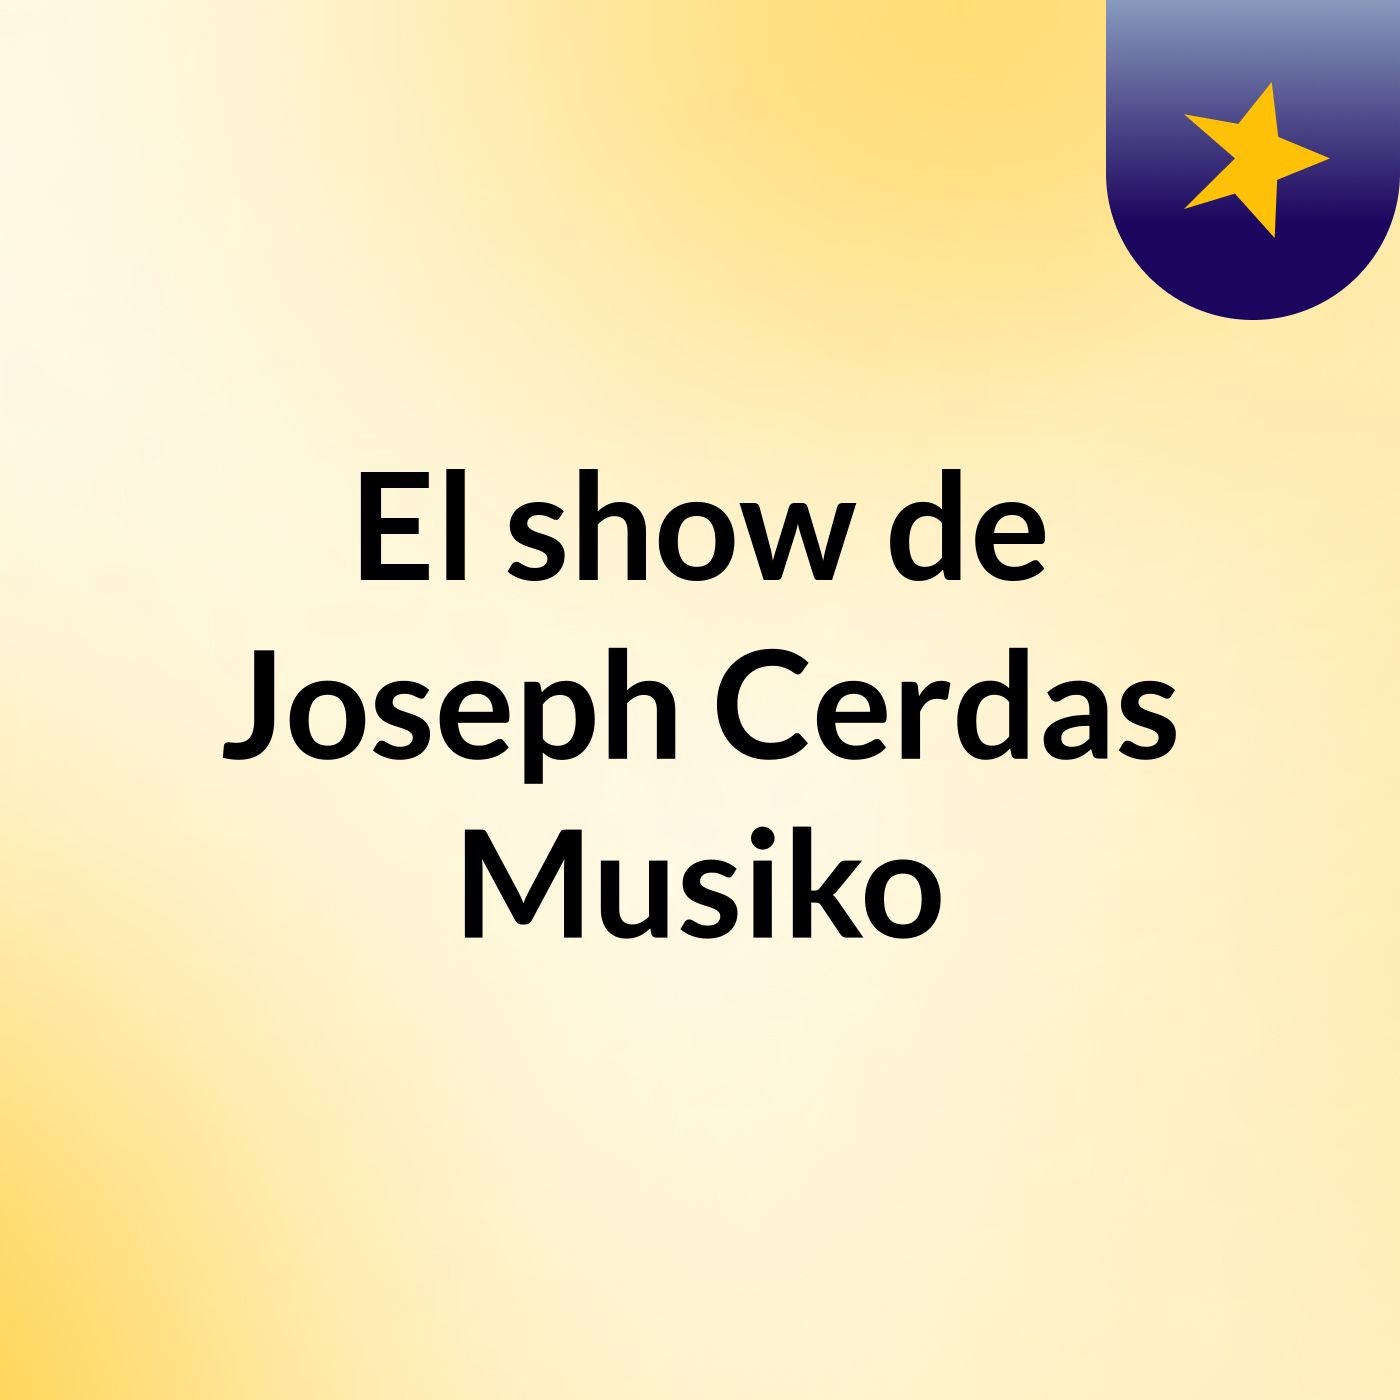 El show de Joseph Cerdas Musiko